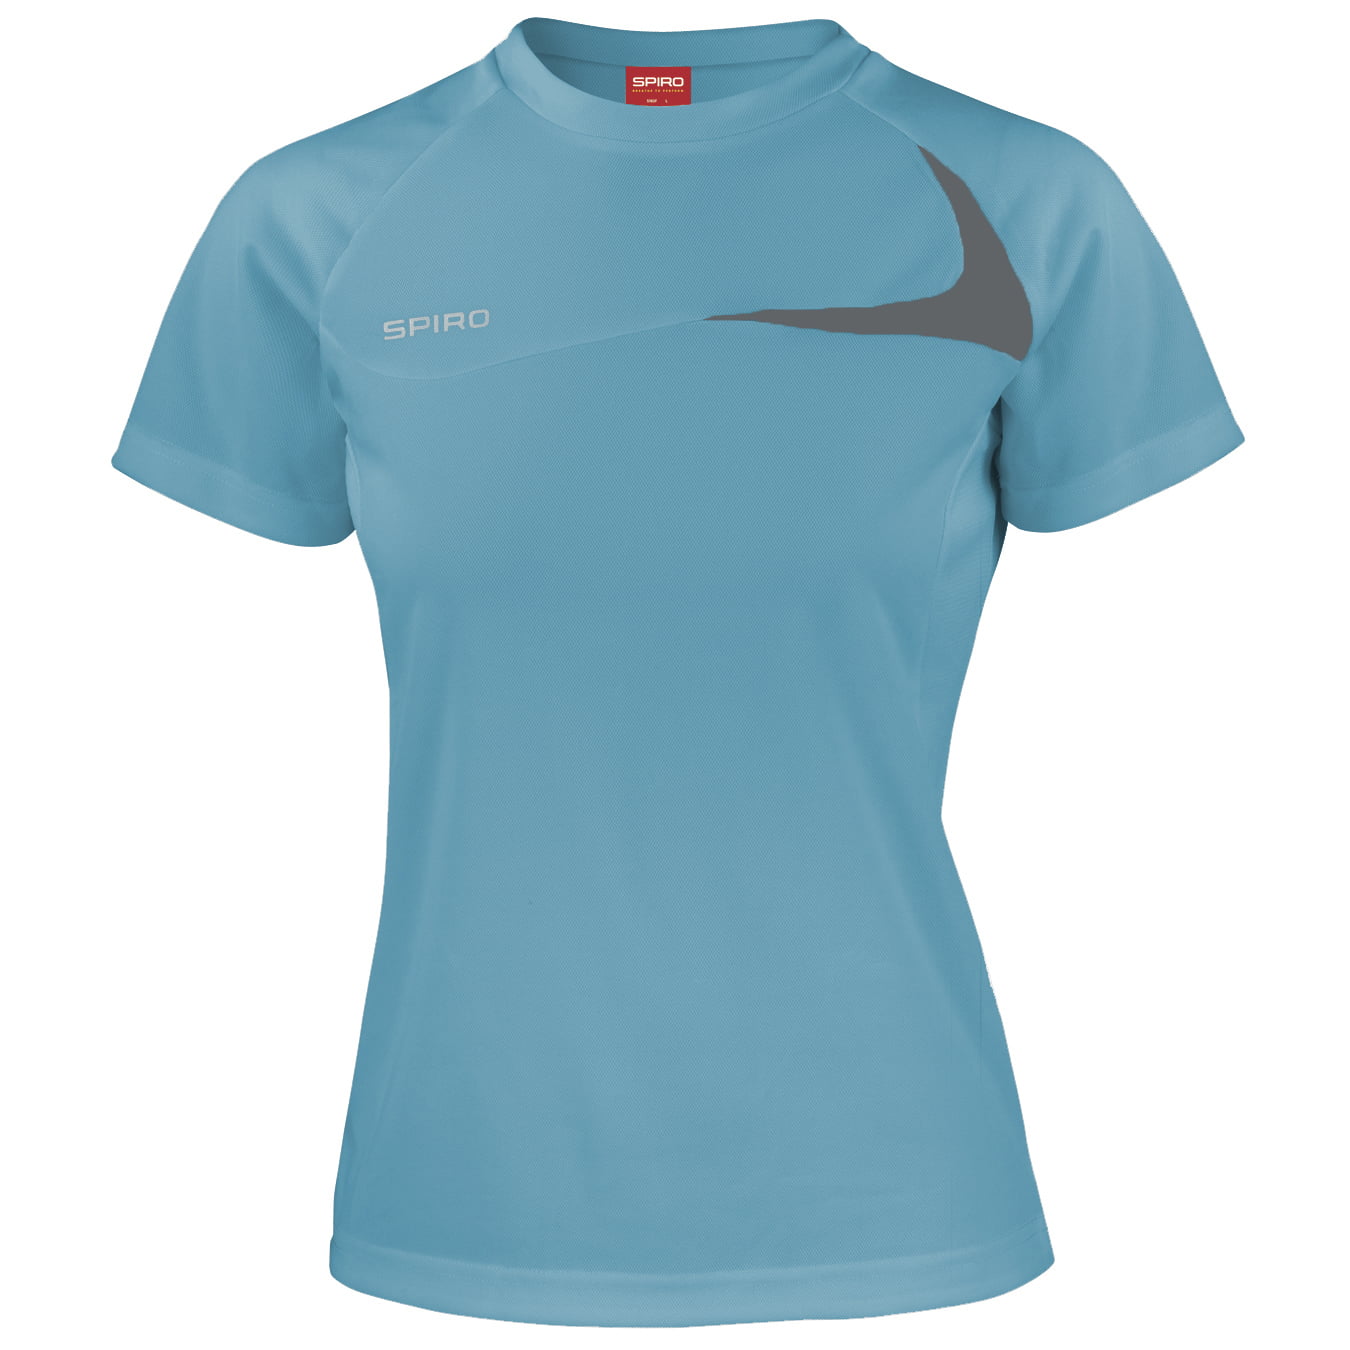 Spiro Womens Dash Training Workout Gym Sports Fitness Workout T-Shirt Top 